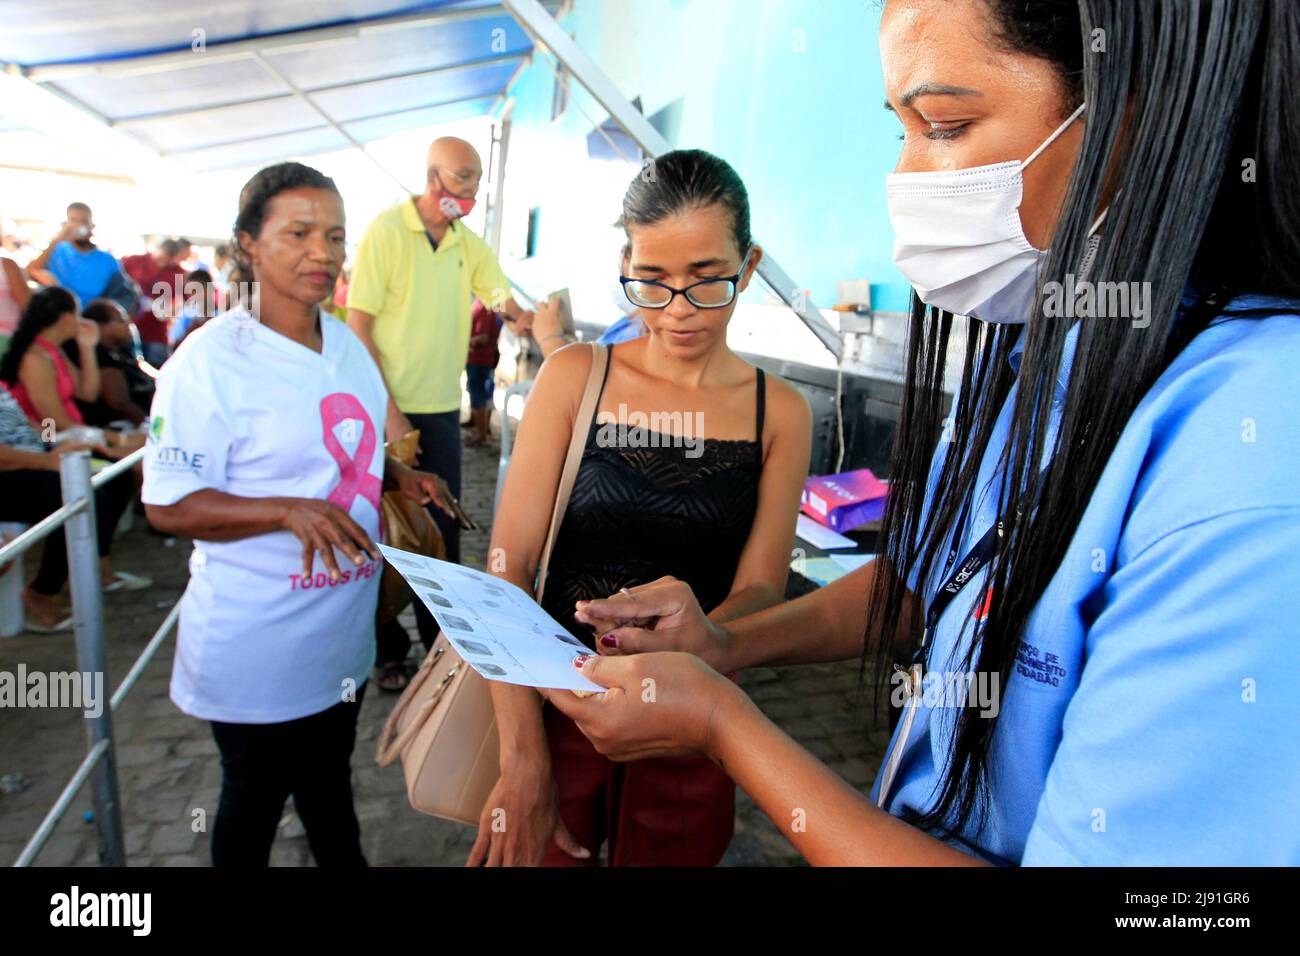 ibotirama, bahia, brazil - may 18, 2022: making identity cards for people during a public health program in the city of Ibotirama. Stock Photo